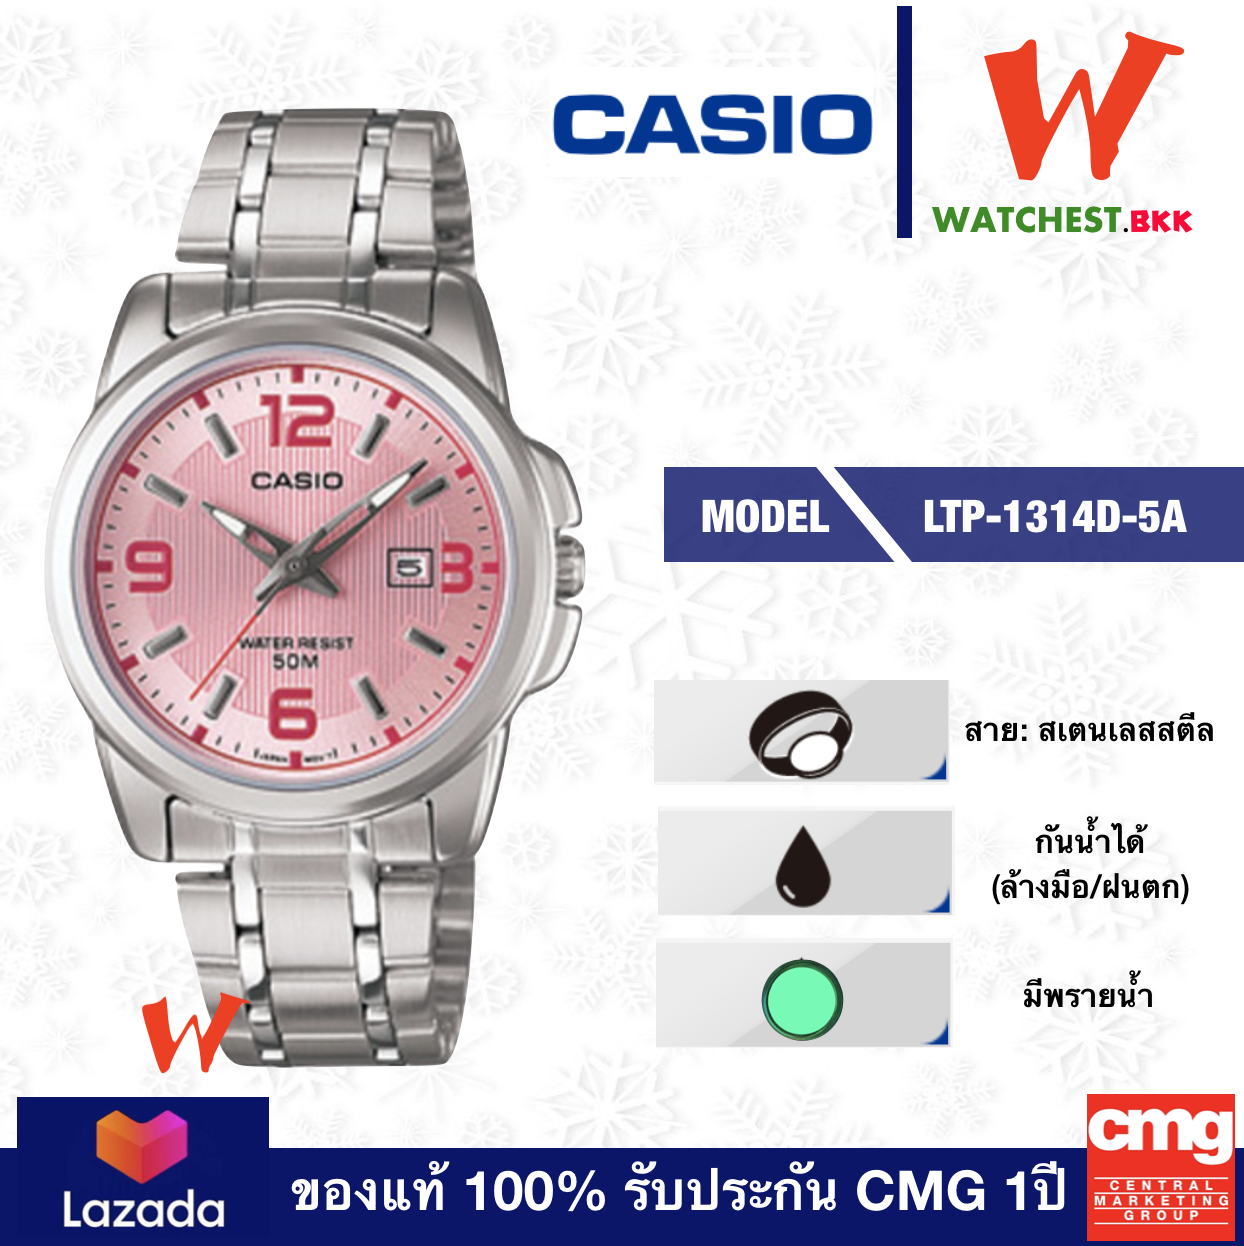 casio นาฬิกาข้อมือผู้หญิง สายสเตนเลส รุ่น LTP-1314D-5A, คาสิโอ้ LTP, LTP-1314 หน้าปัดชมพู ตัวล็อกบานพับ (watchestbkk คาสิโอ แท้ ของแท้100% ประกัน CMG)